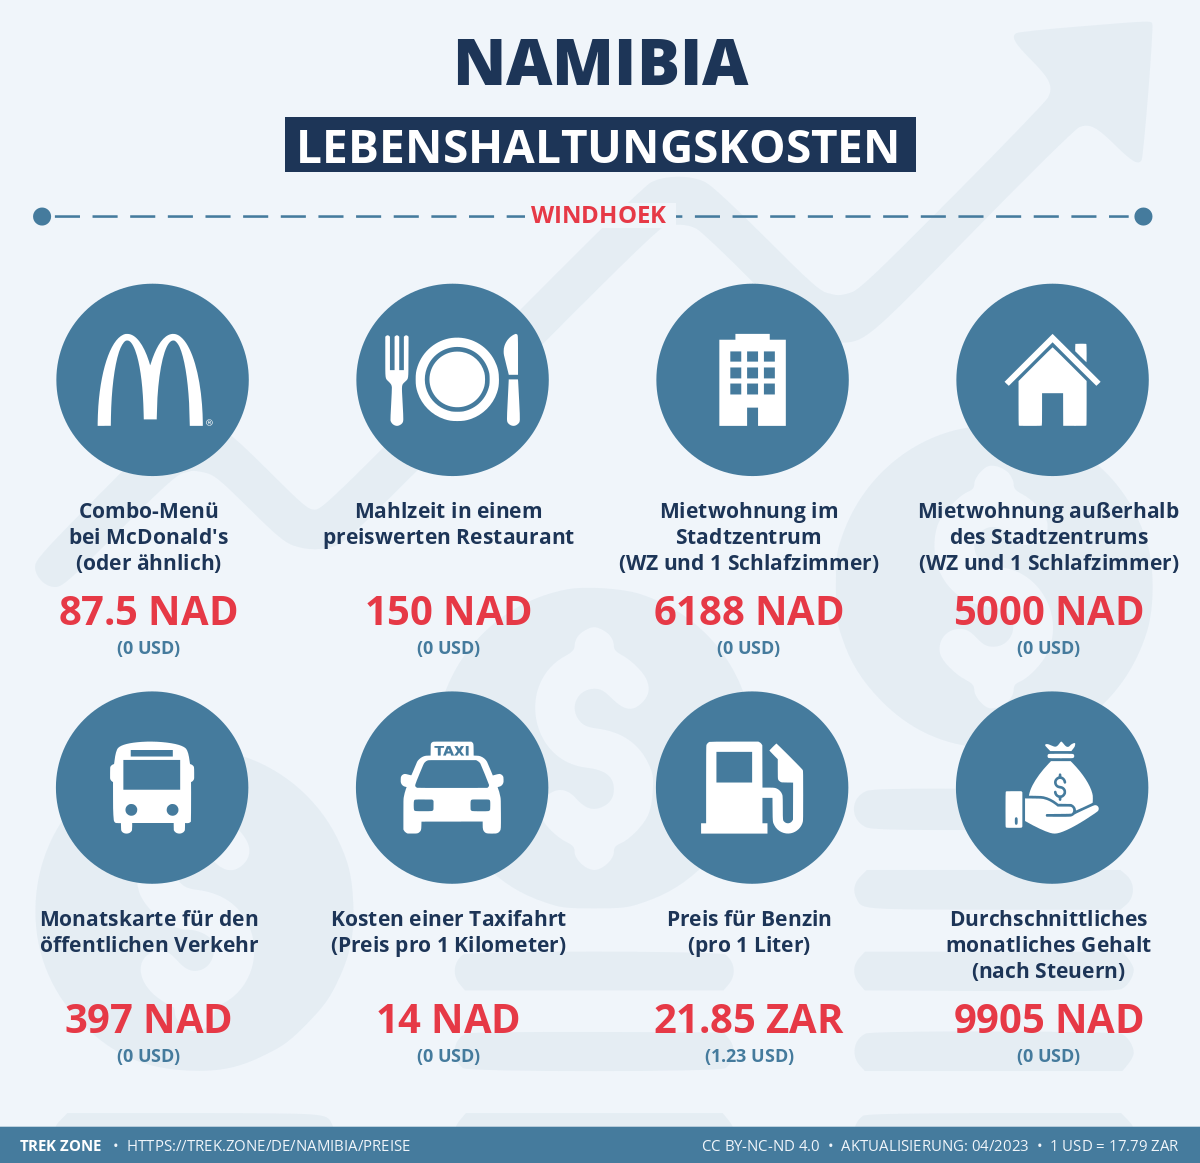 preise und lebenskosten namibia